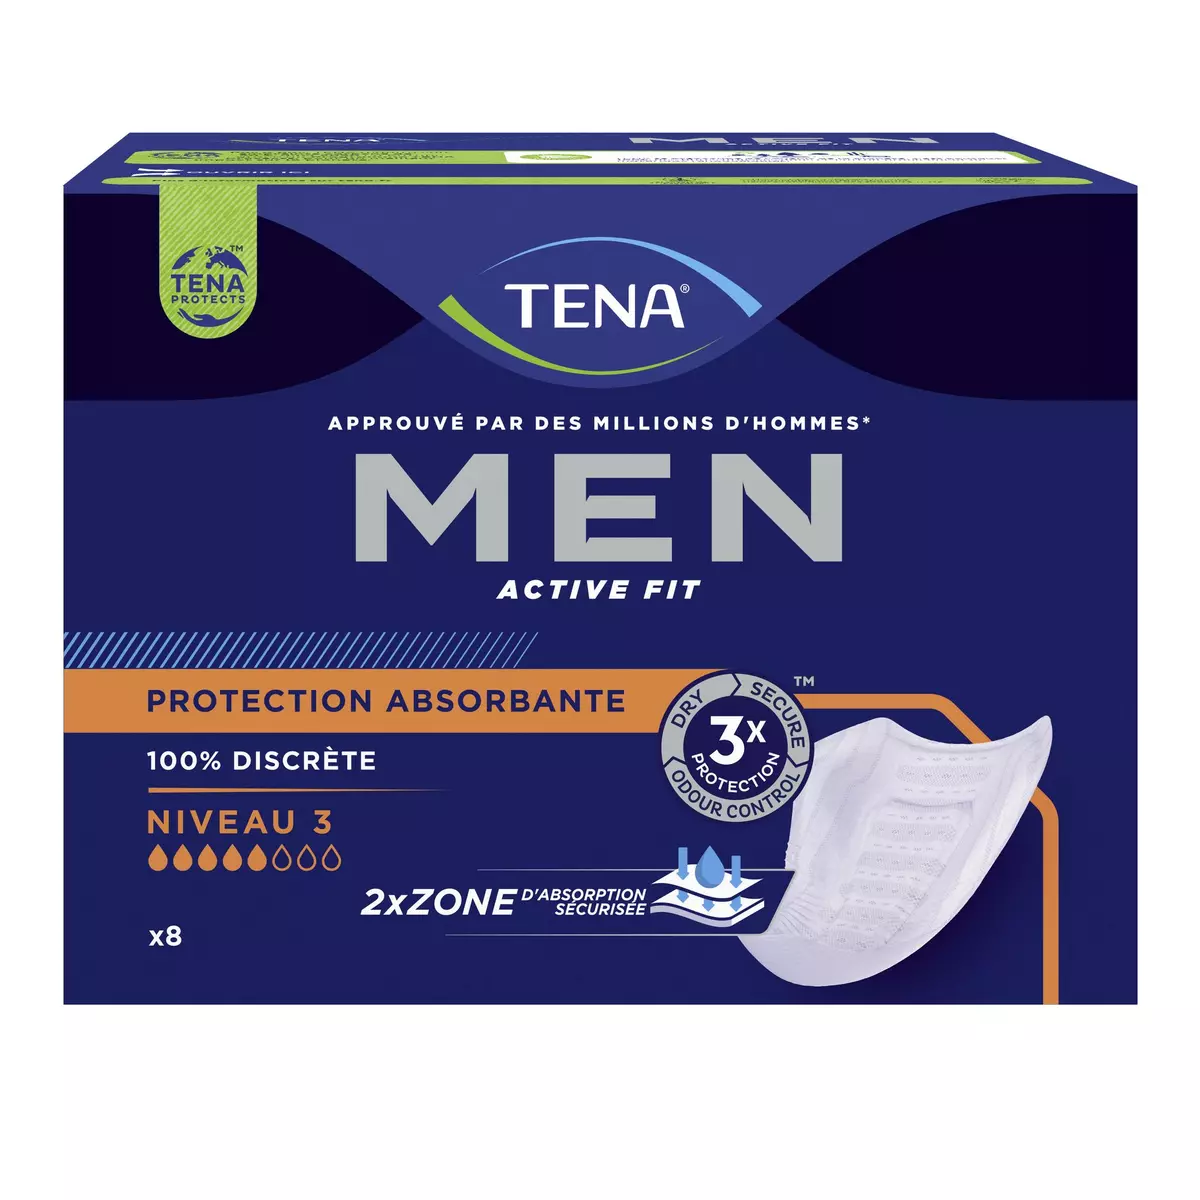 TENA MEN Protection absorbante niveau 3 x8